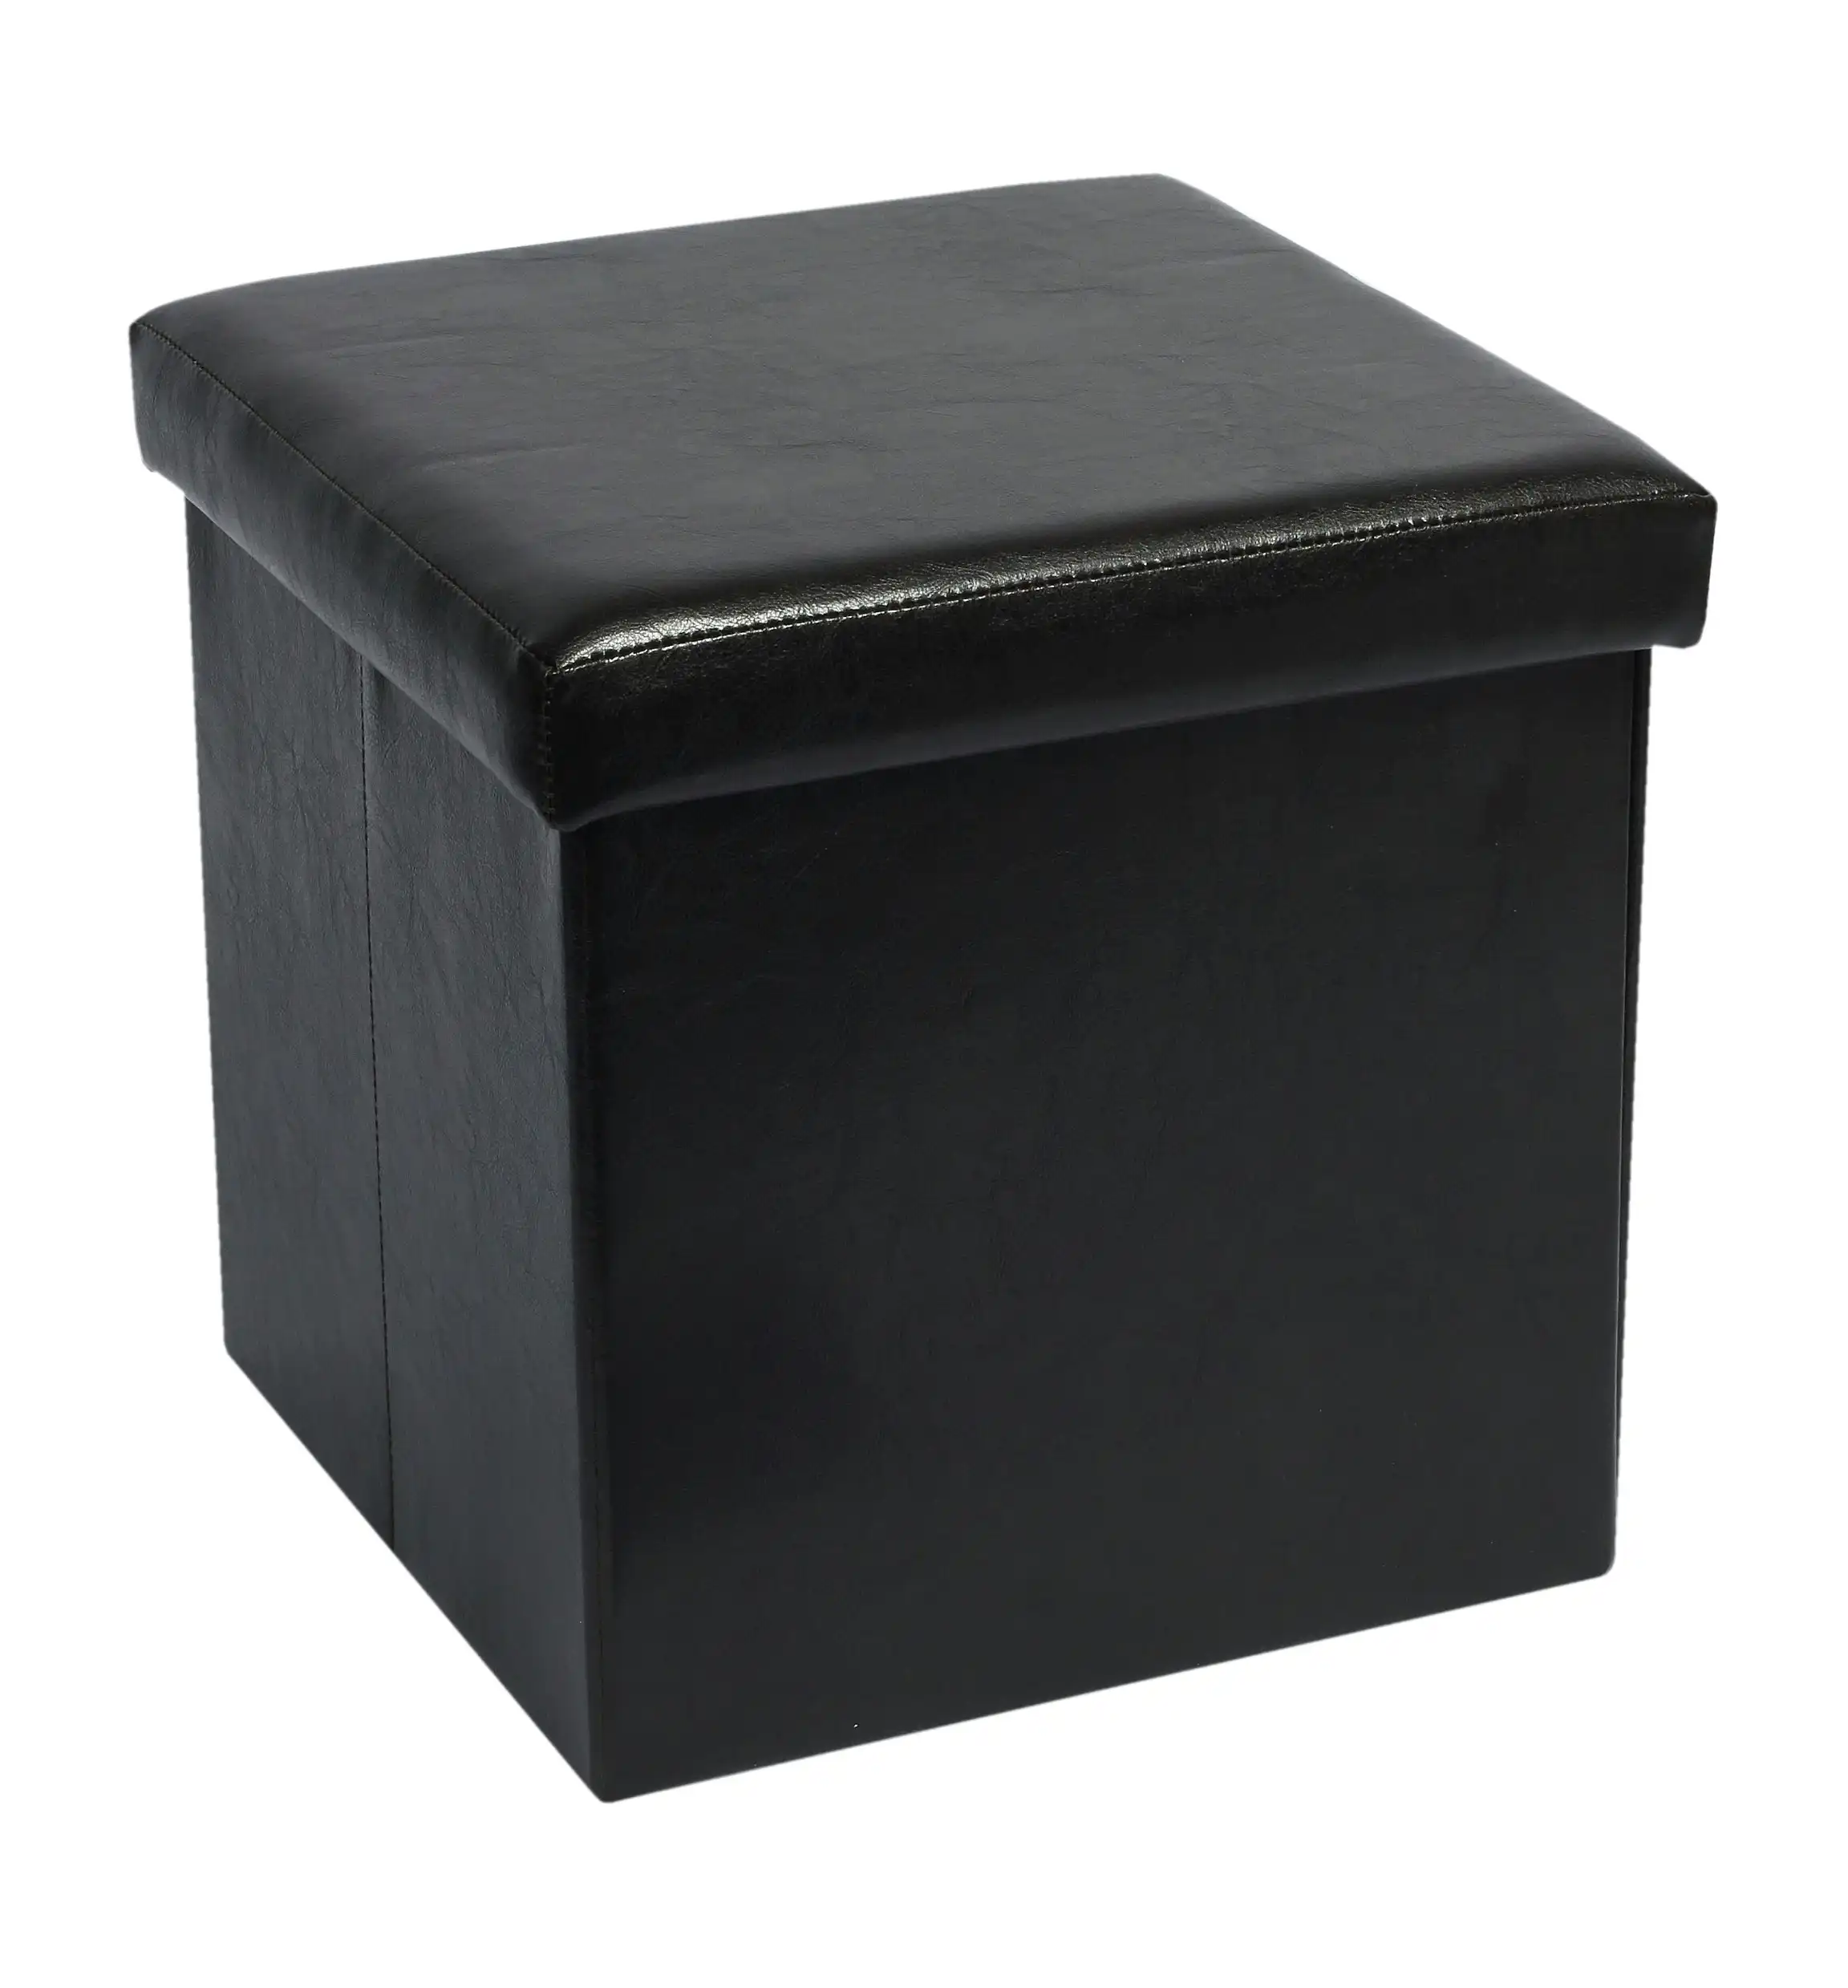 Vstara Folding Storage Ottoman Black Faux Leather Finish 38x38x37cm